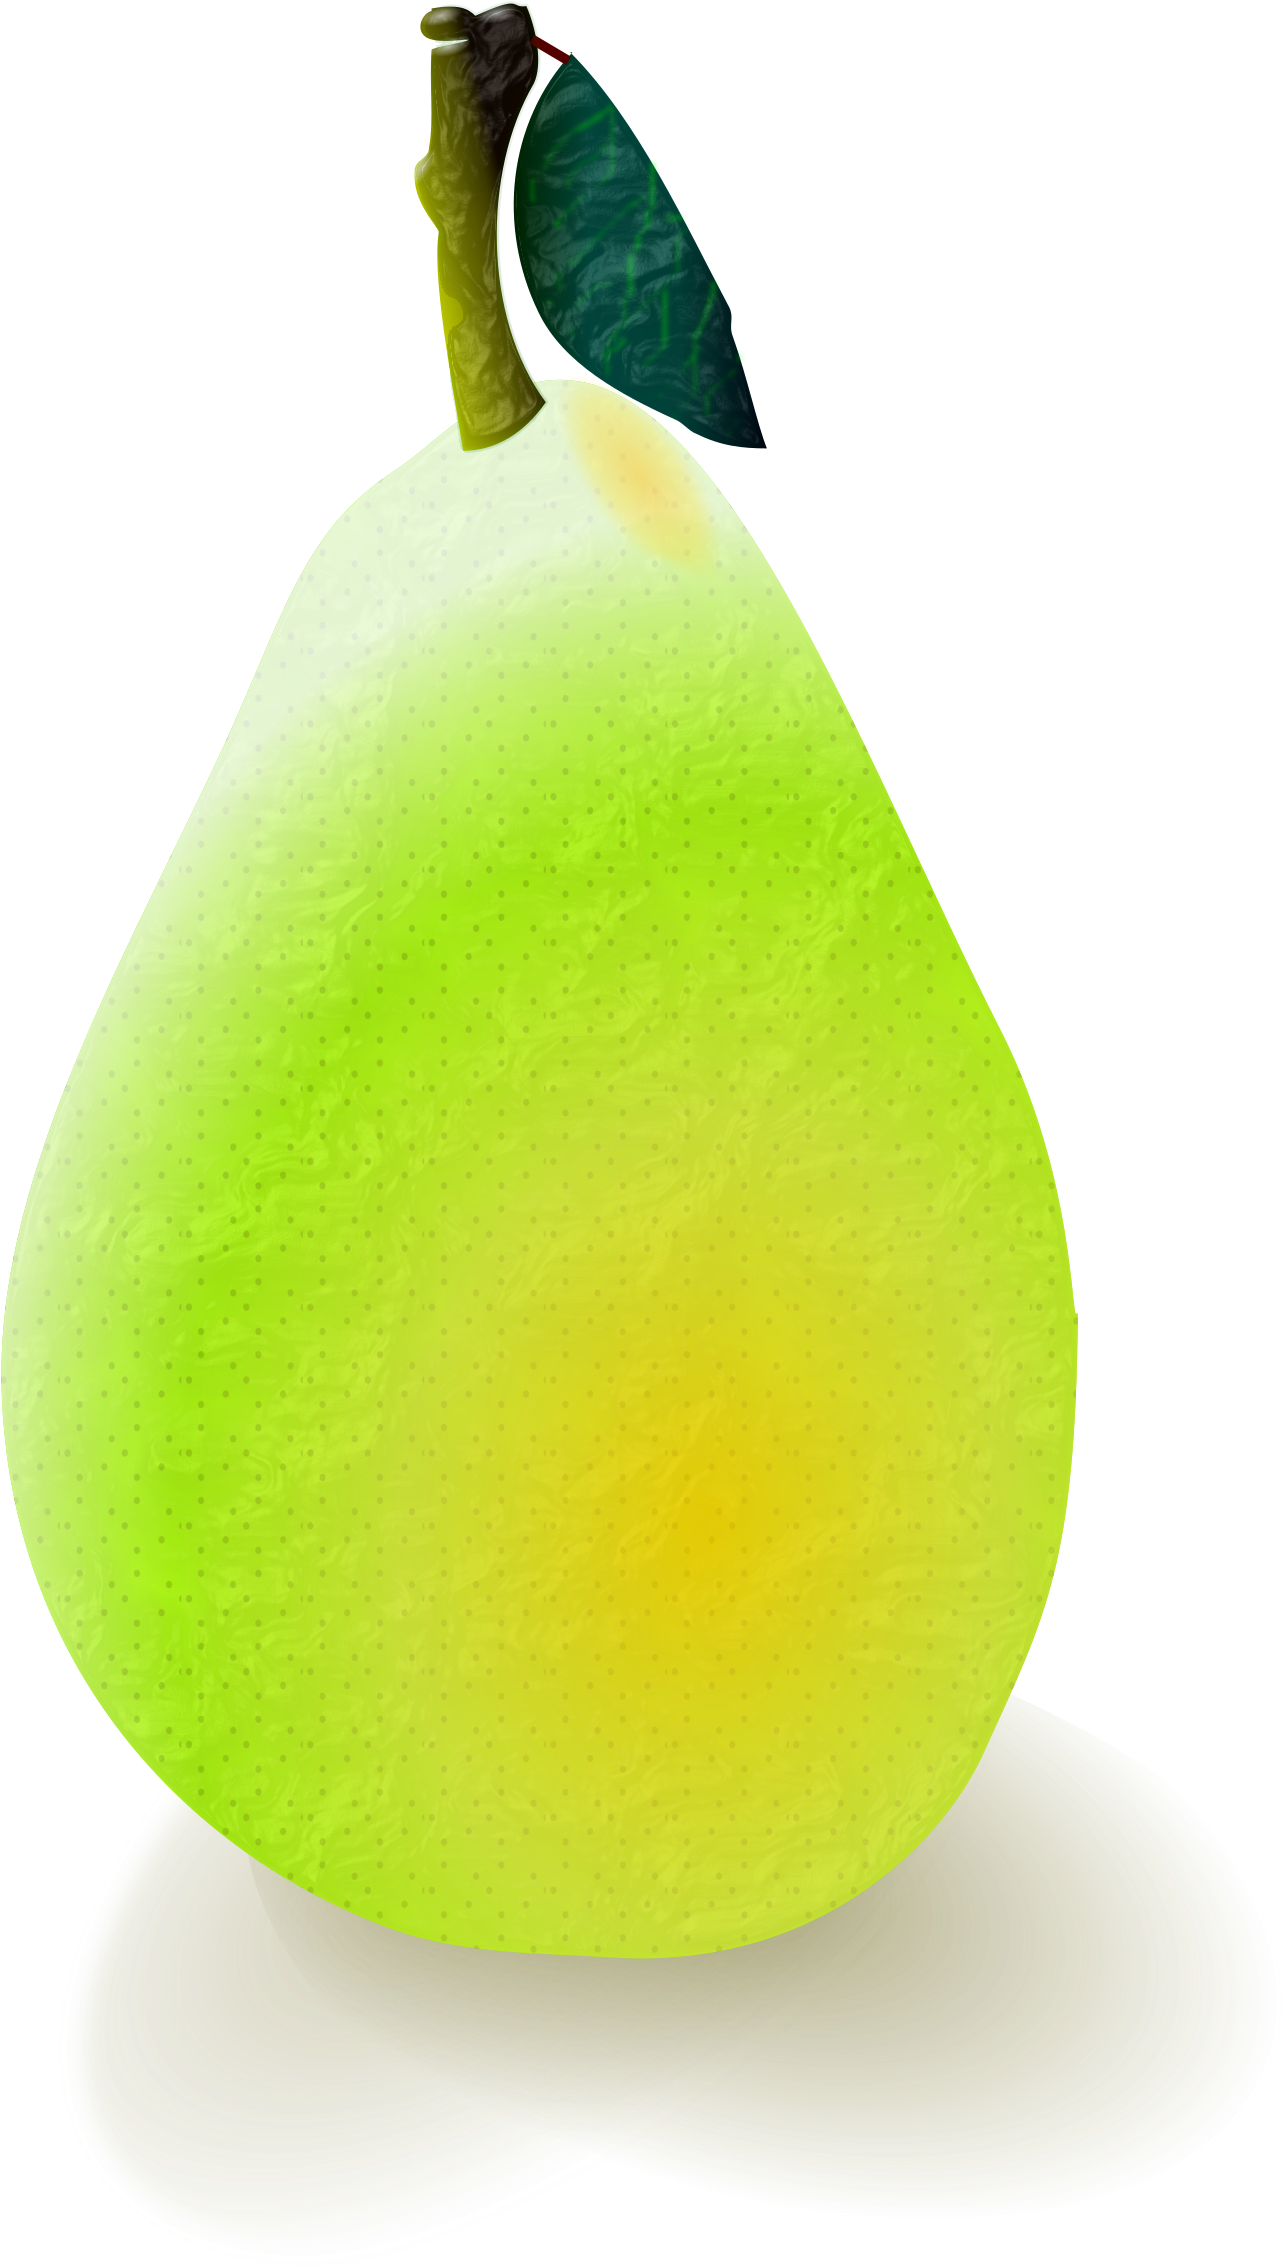 Green Yellow Pear Illustration